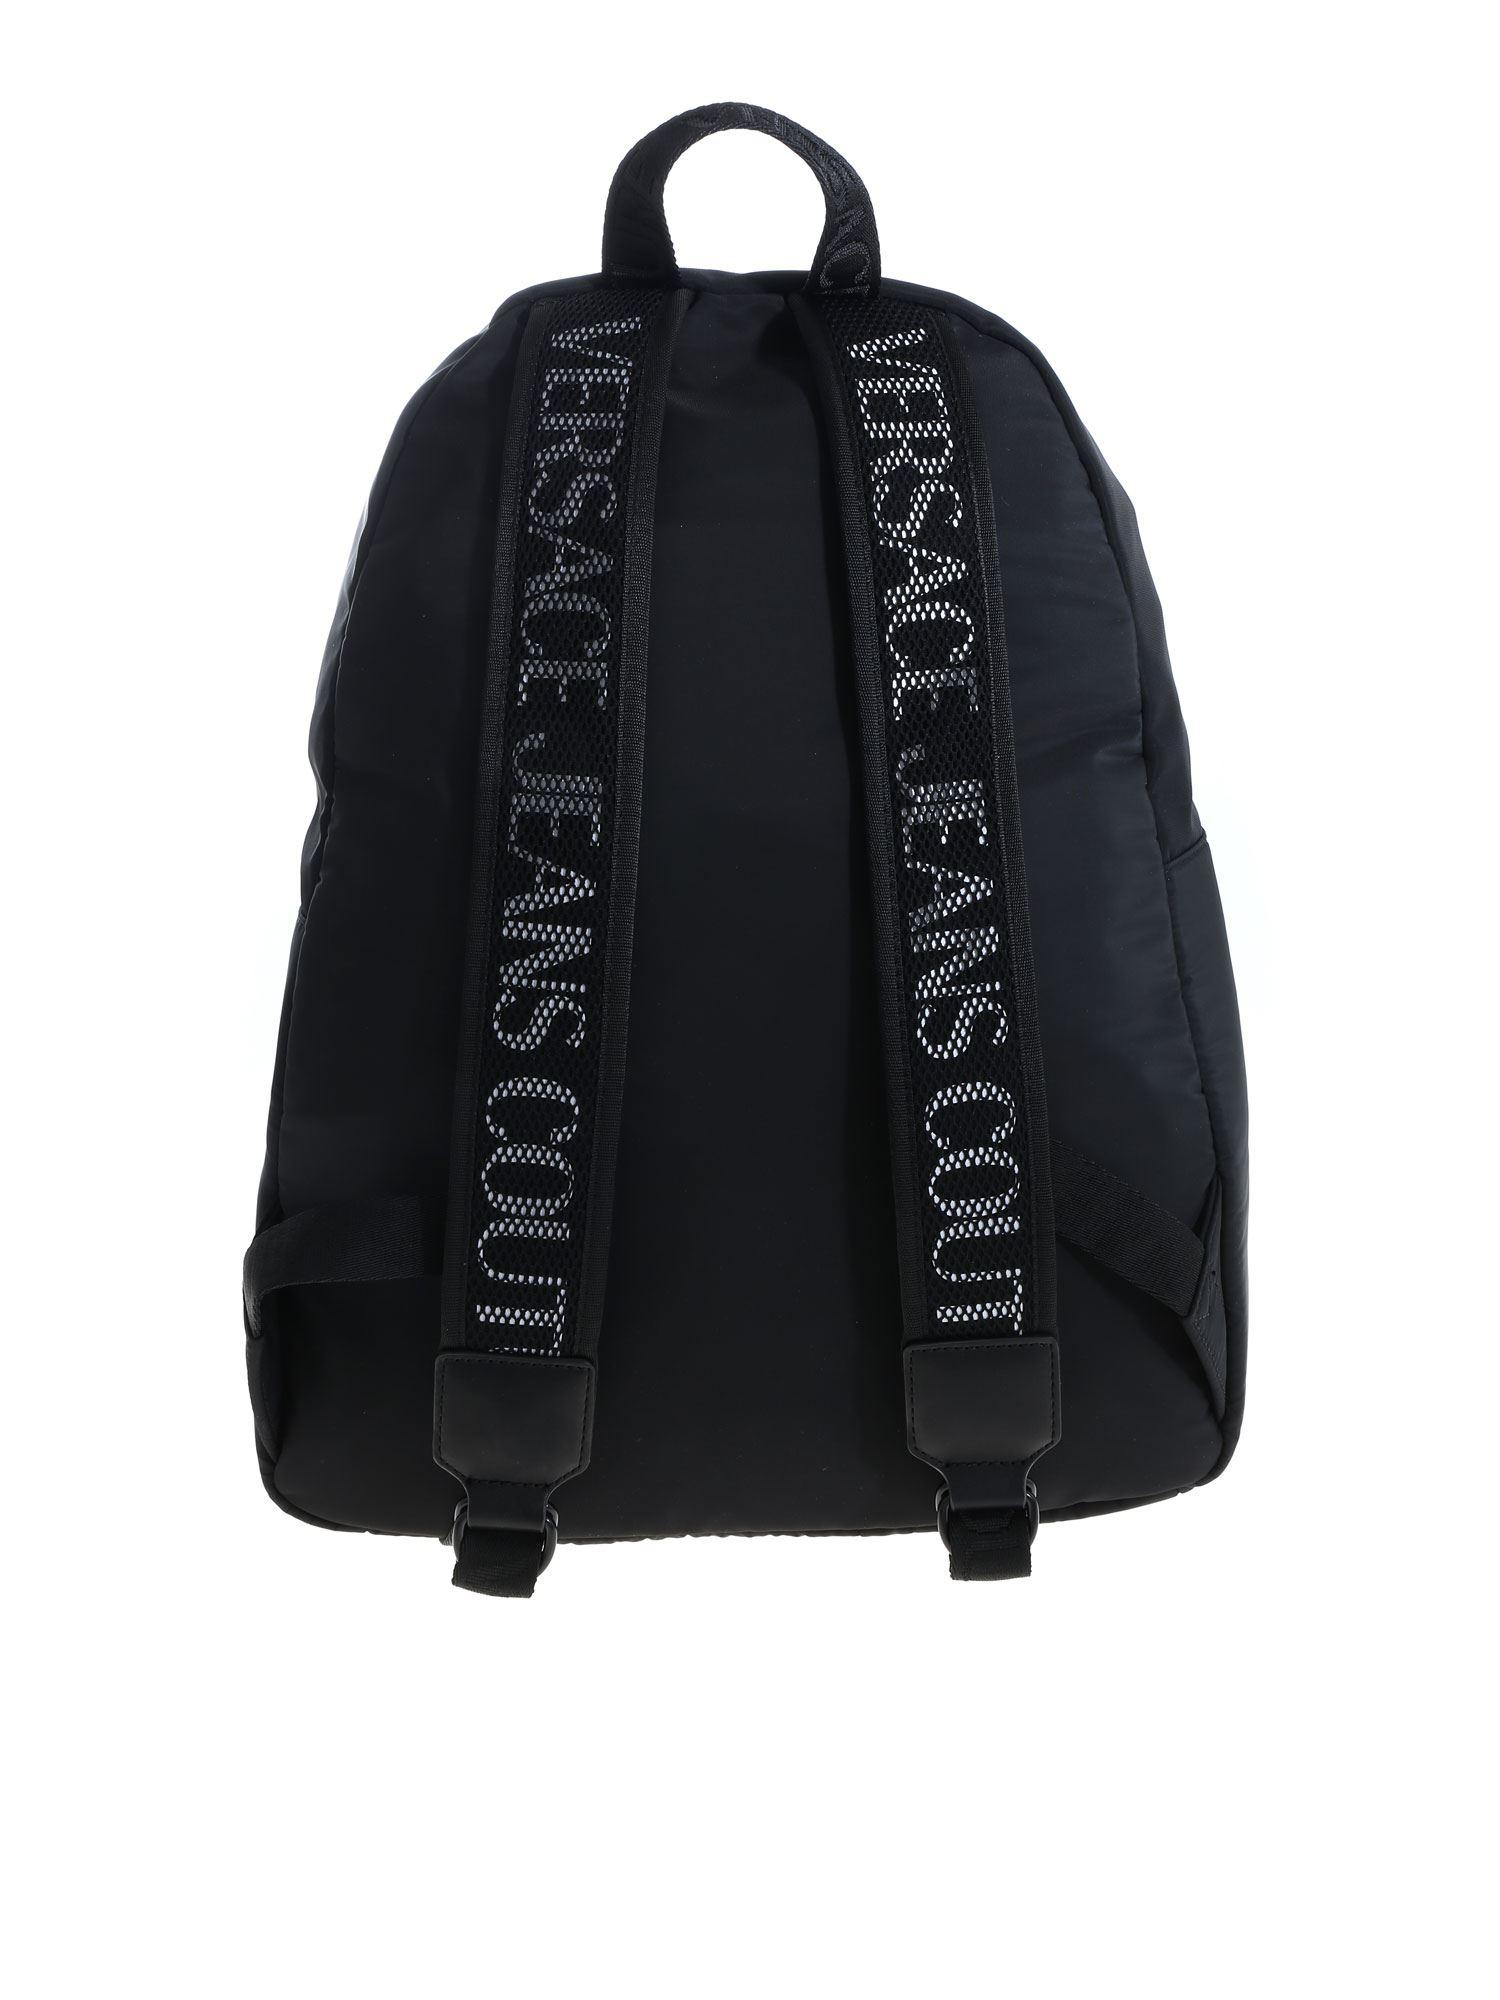 Versace Jeans Logo Backpack in Black for Men - Lyst